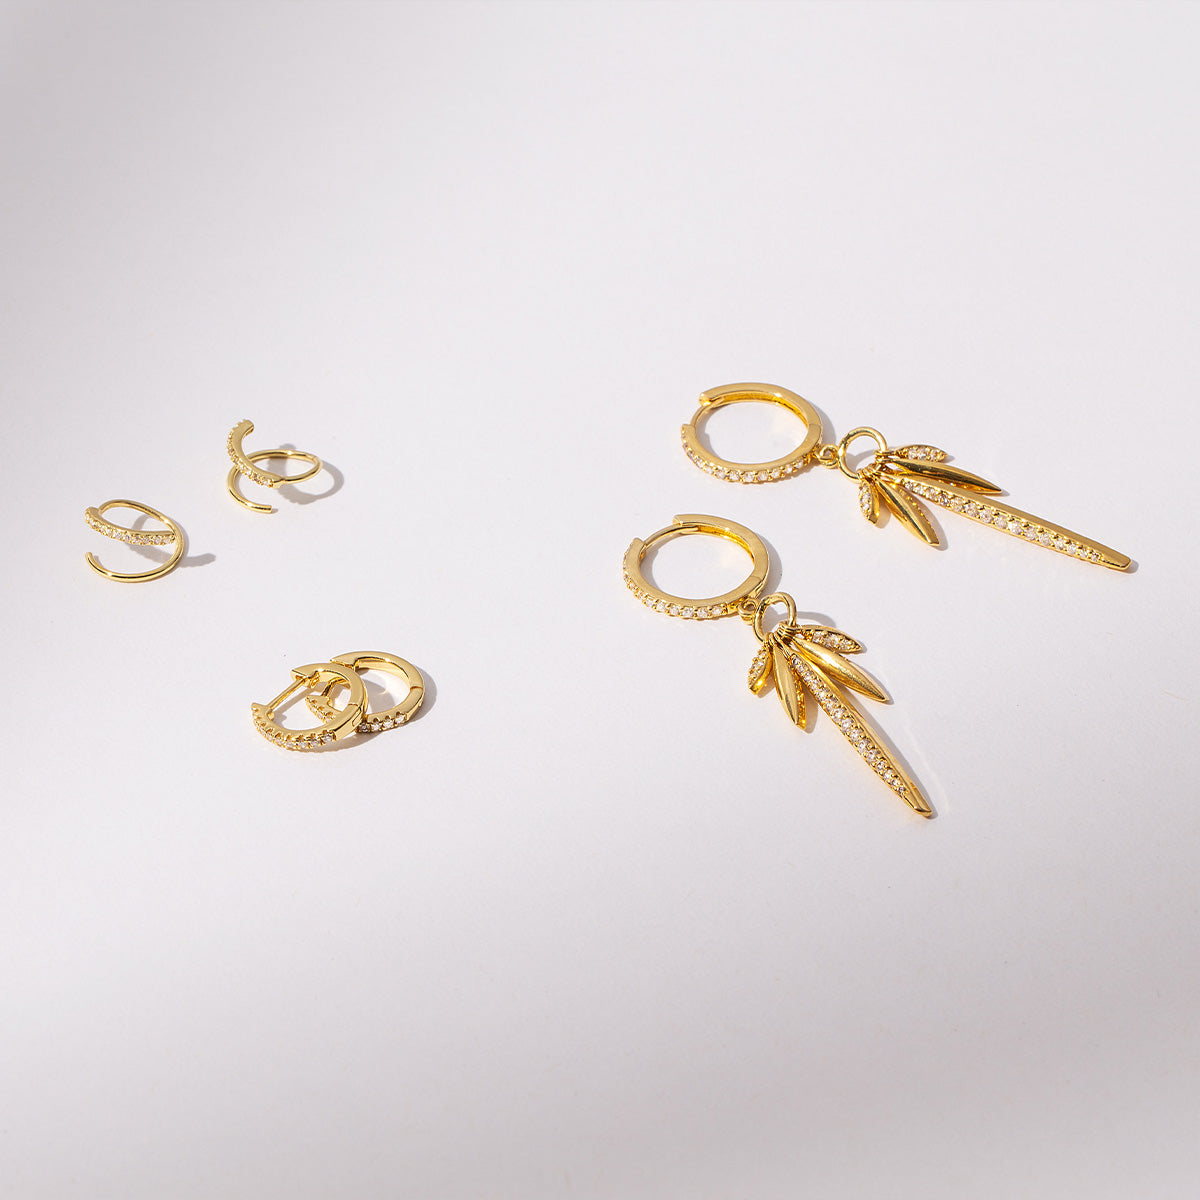 Rocker Earring Set | Gold | Product Image | Uncommon James